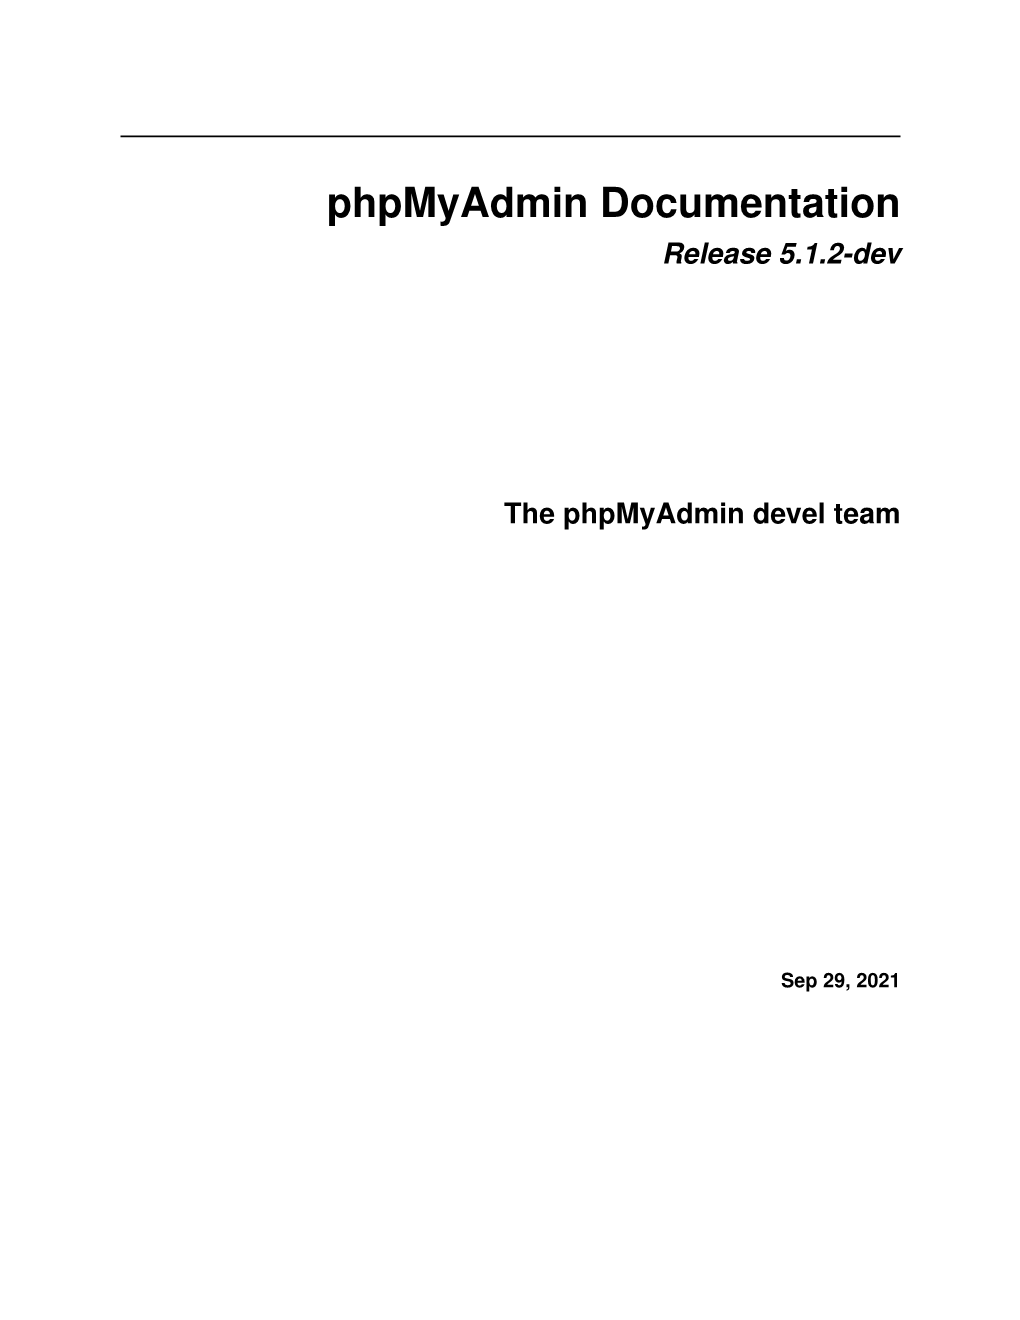 Phpmyadmin Documentation Release 5.1.2-Dev